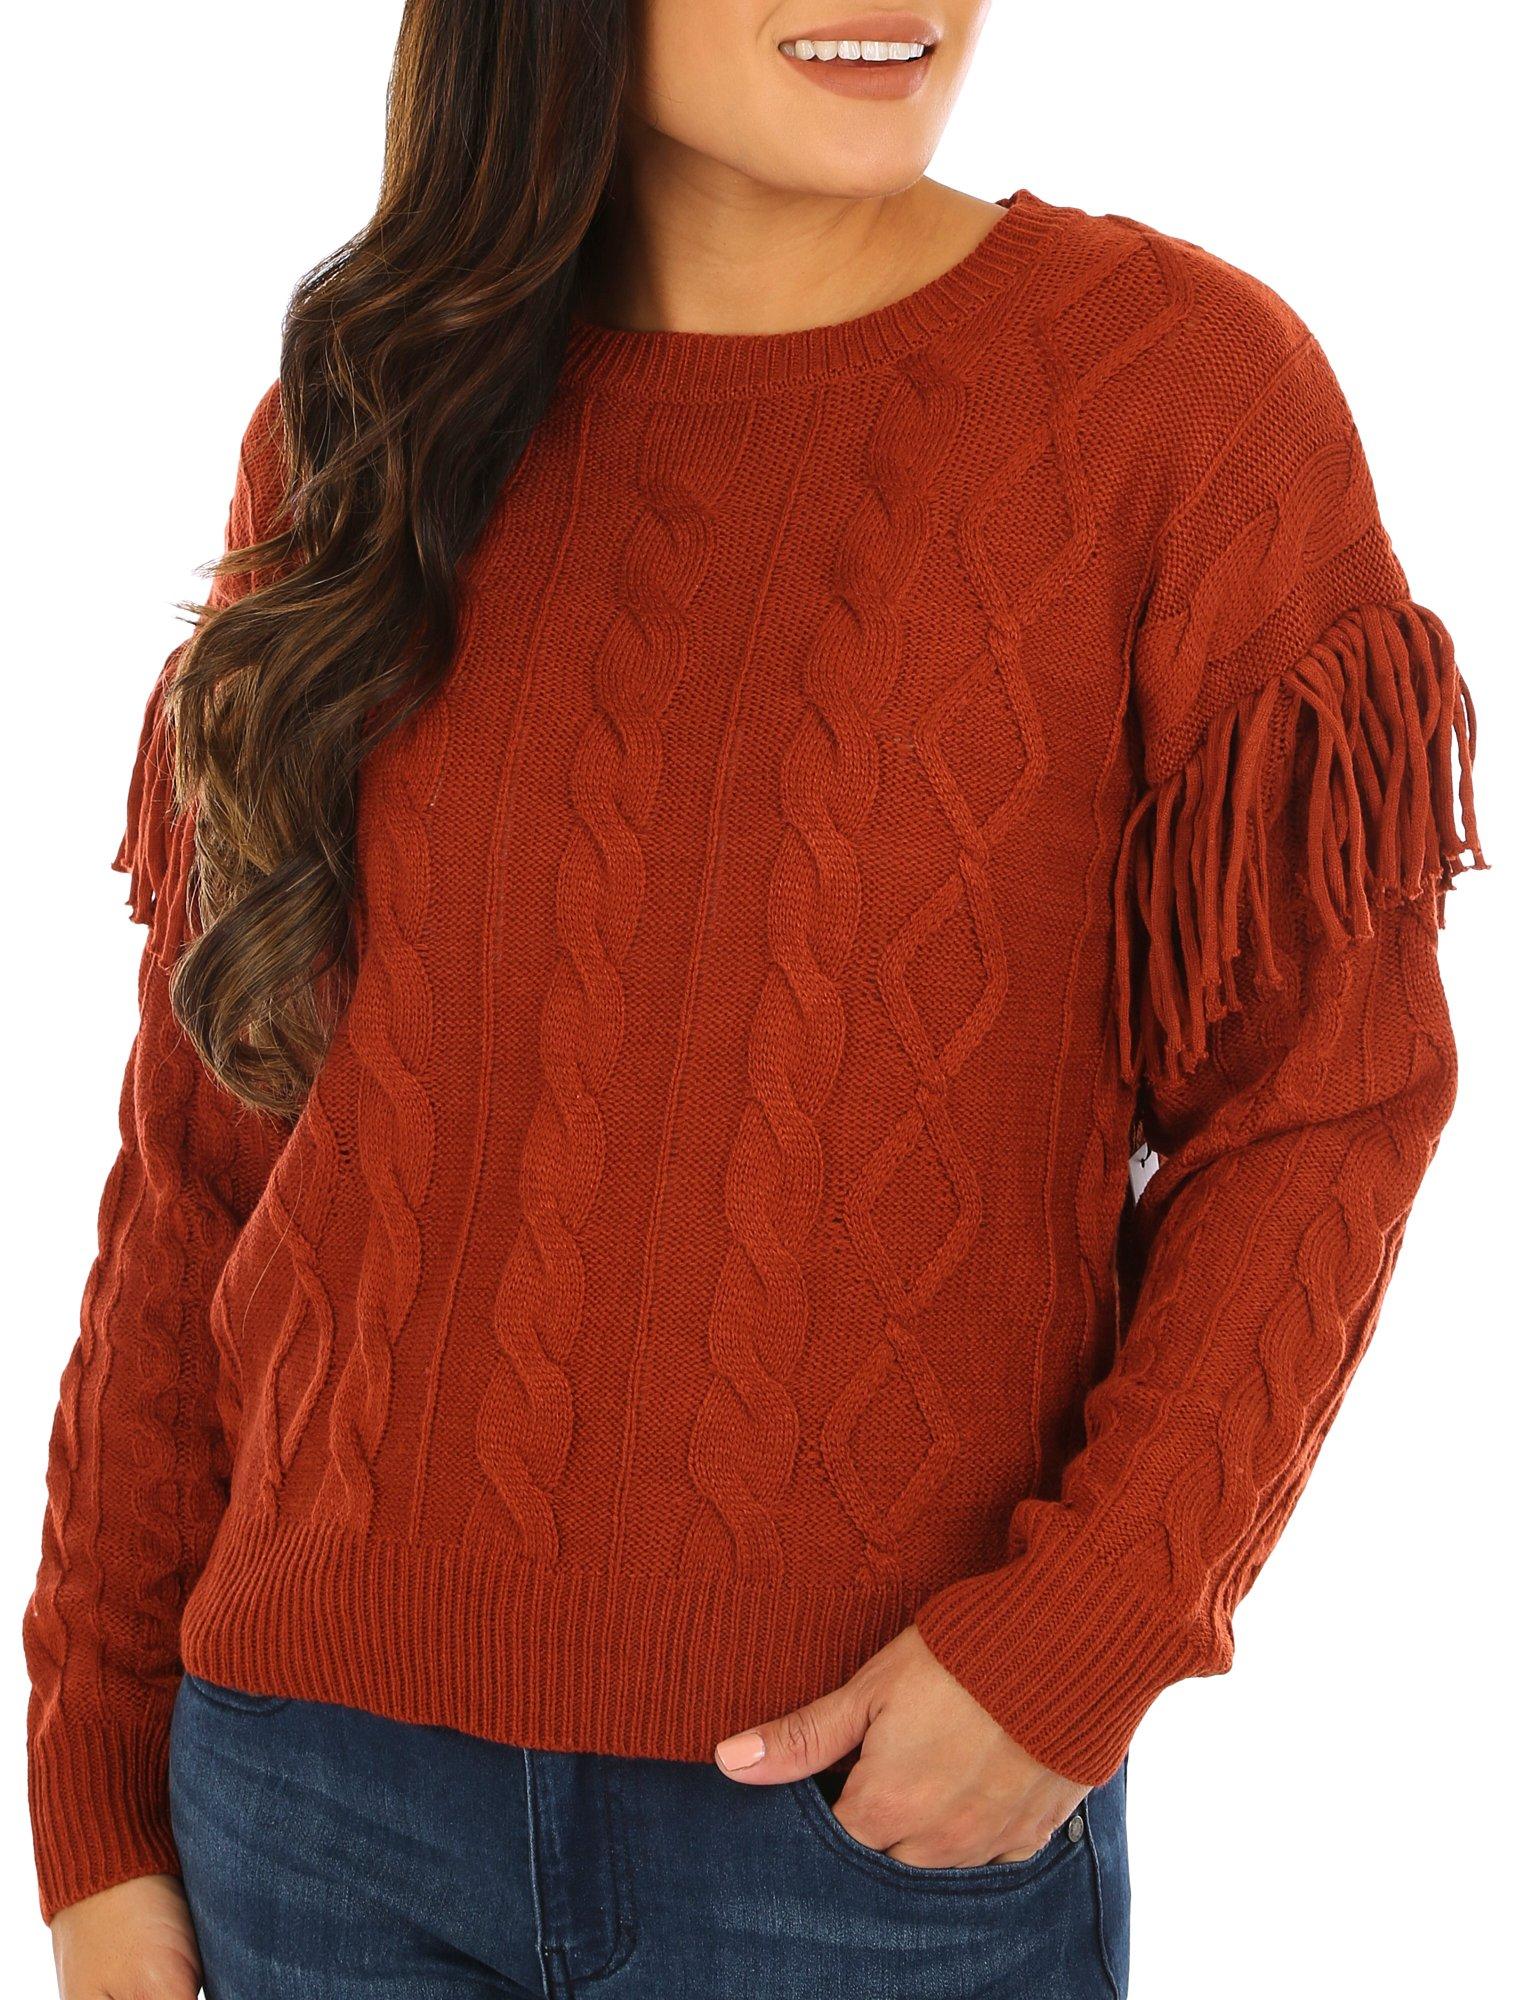 Women's Solid Cowl Neck Fringe Sweater